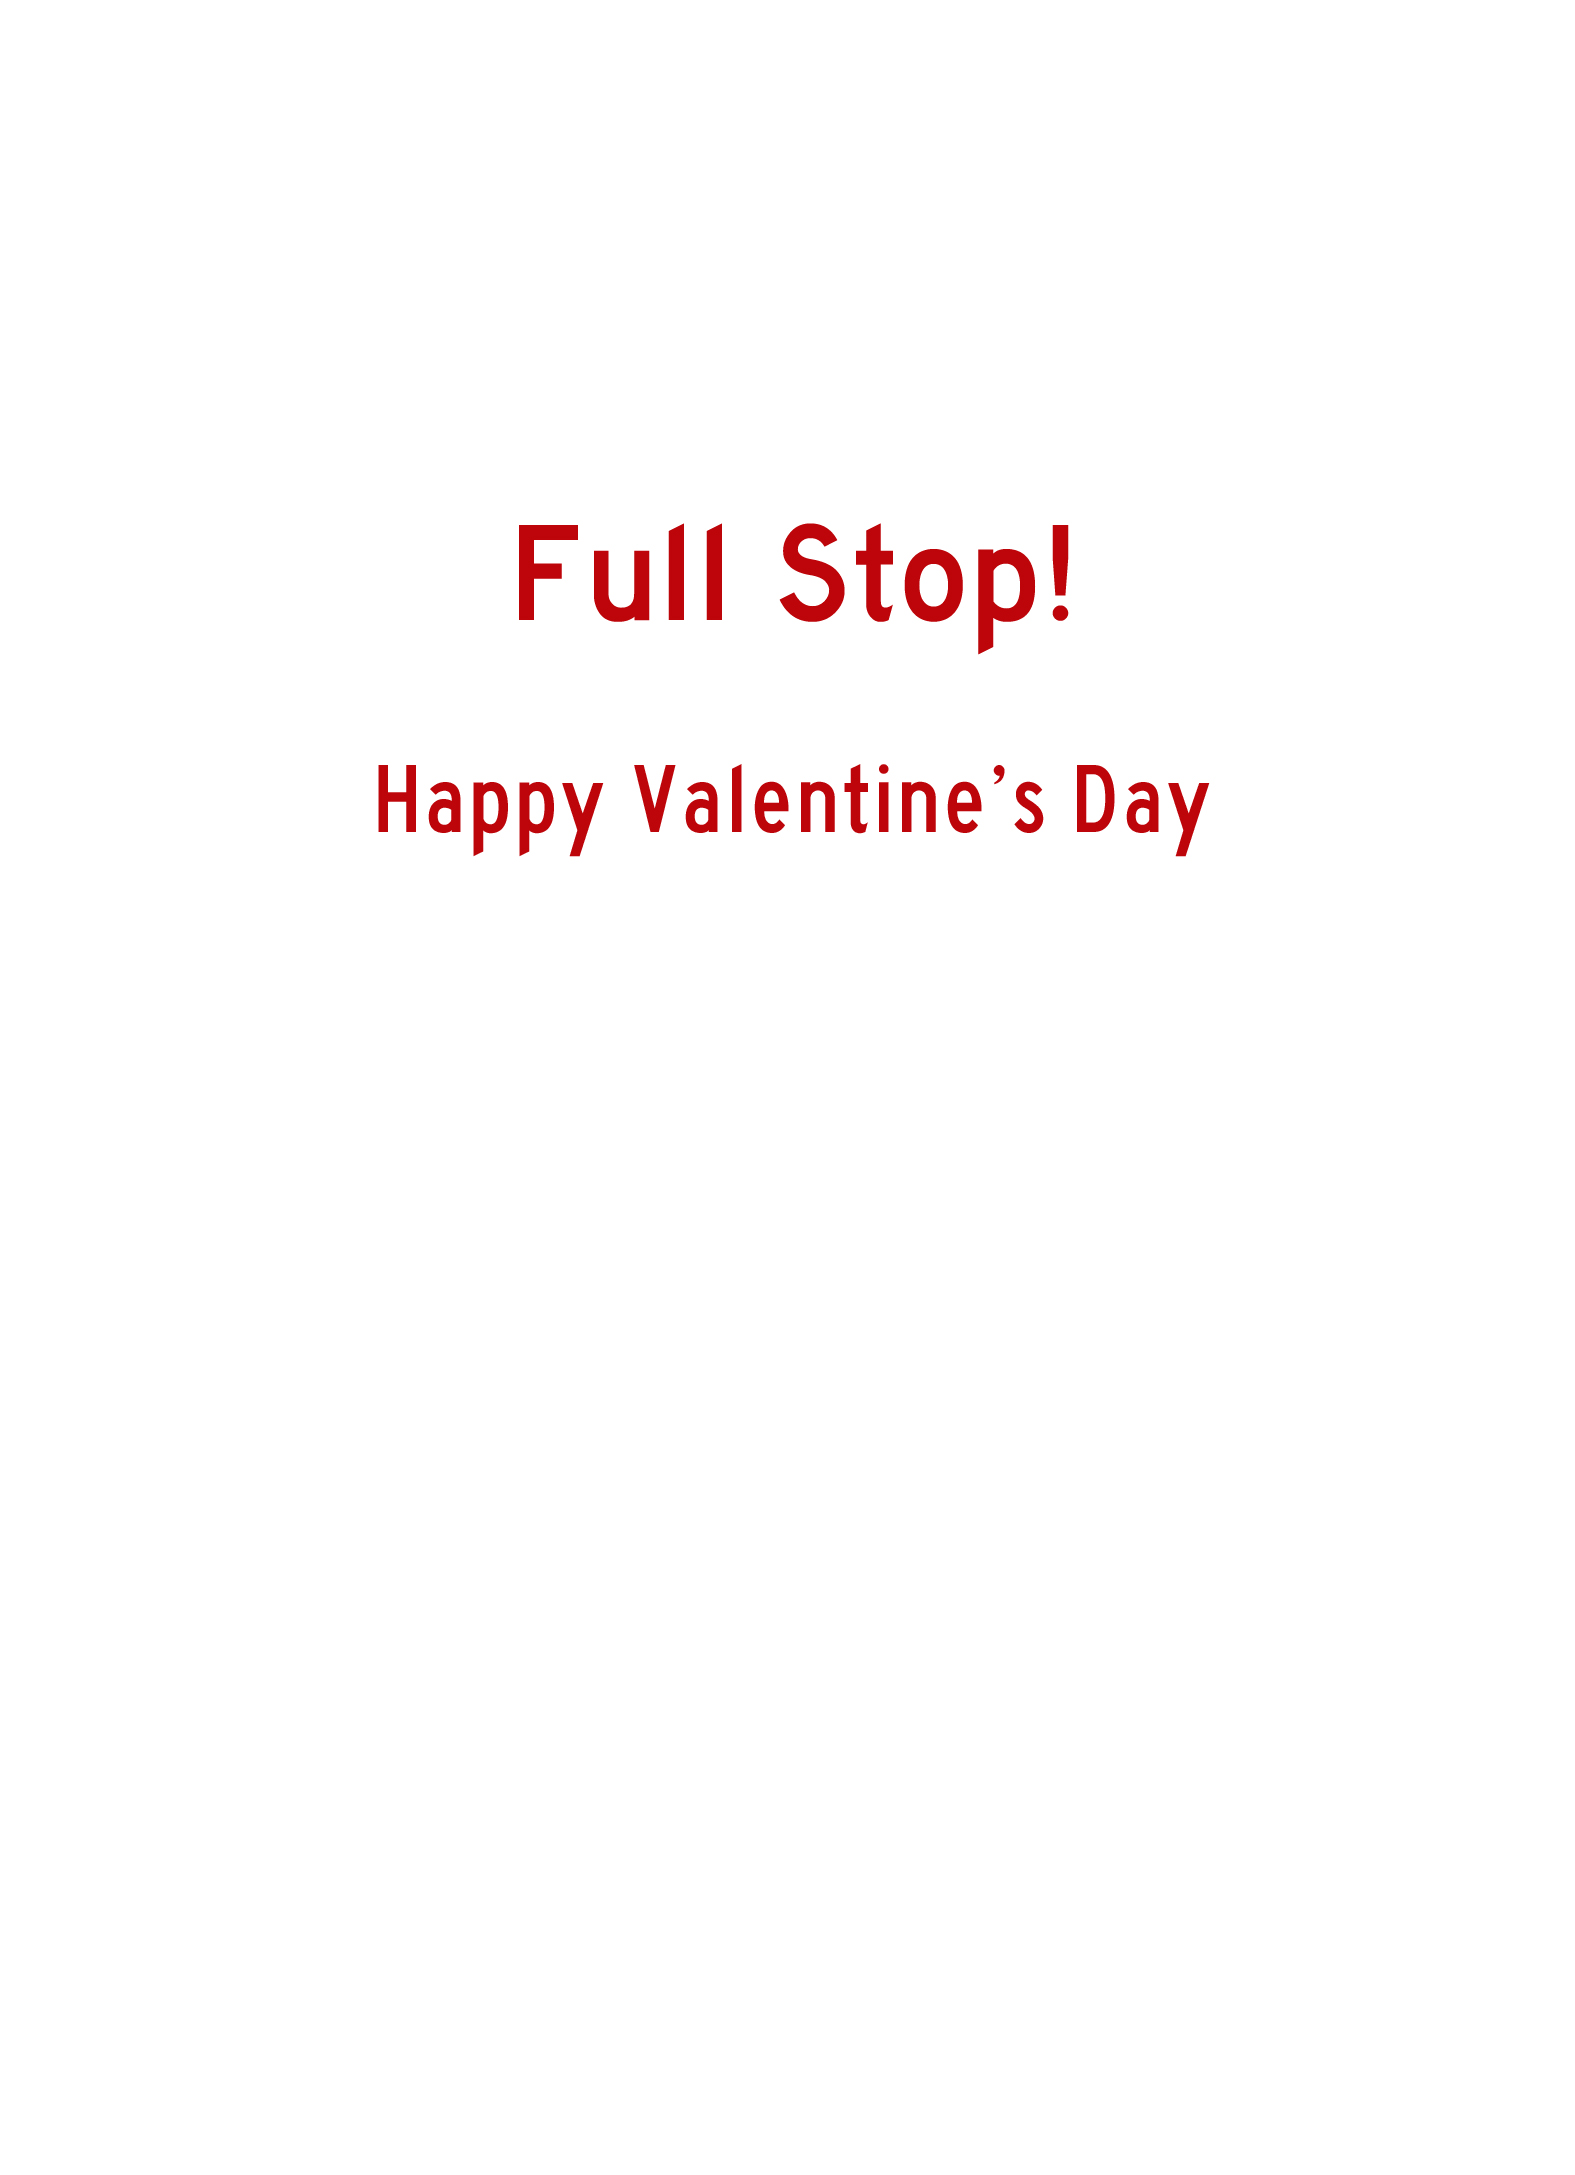 Full Stop VAL Romantic Card Inside